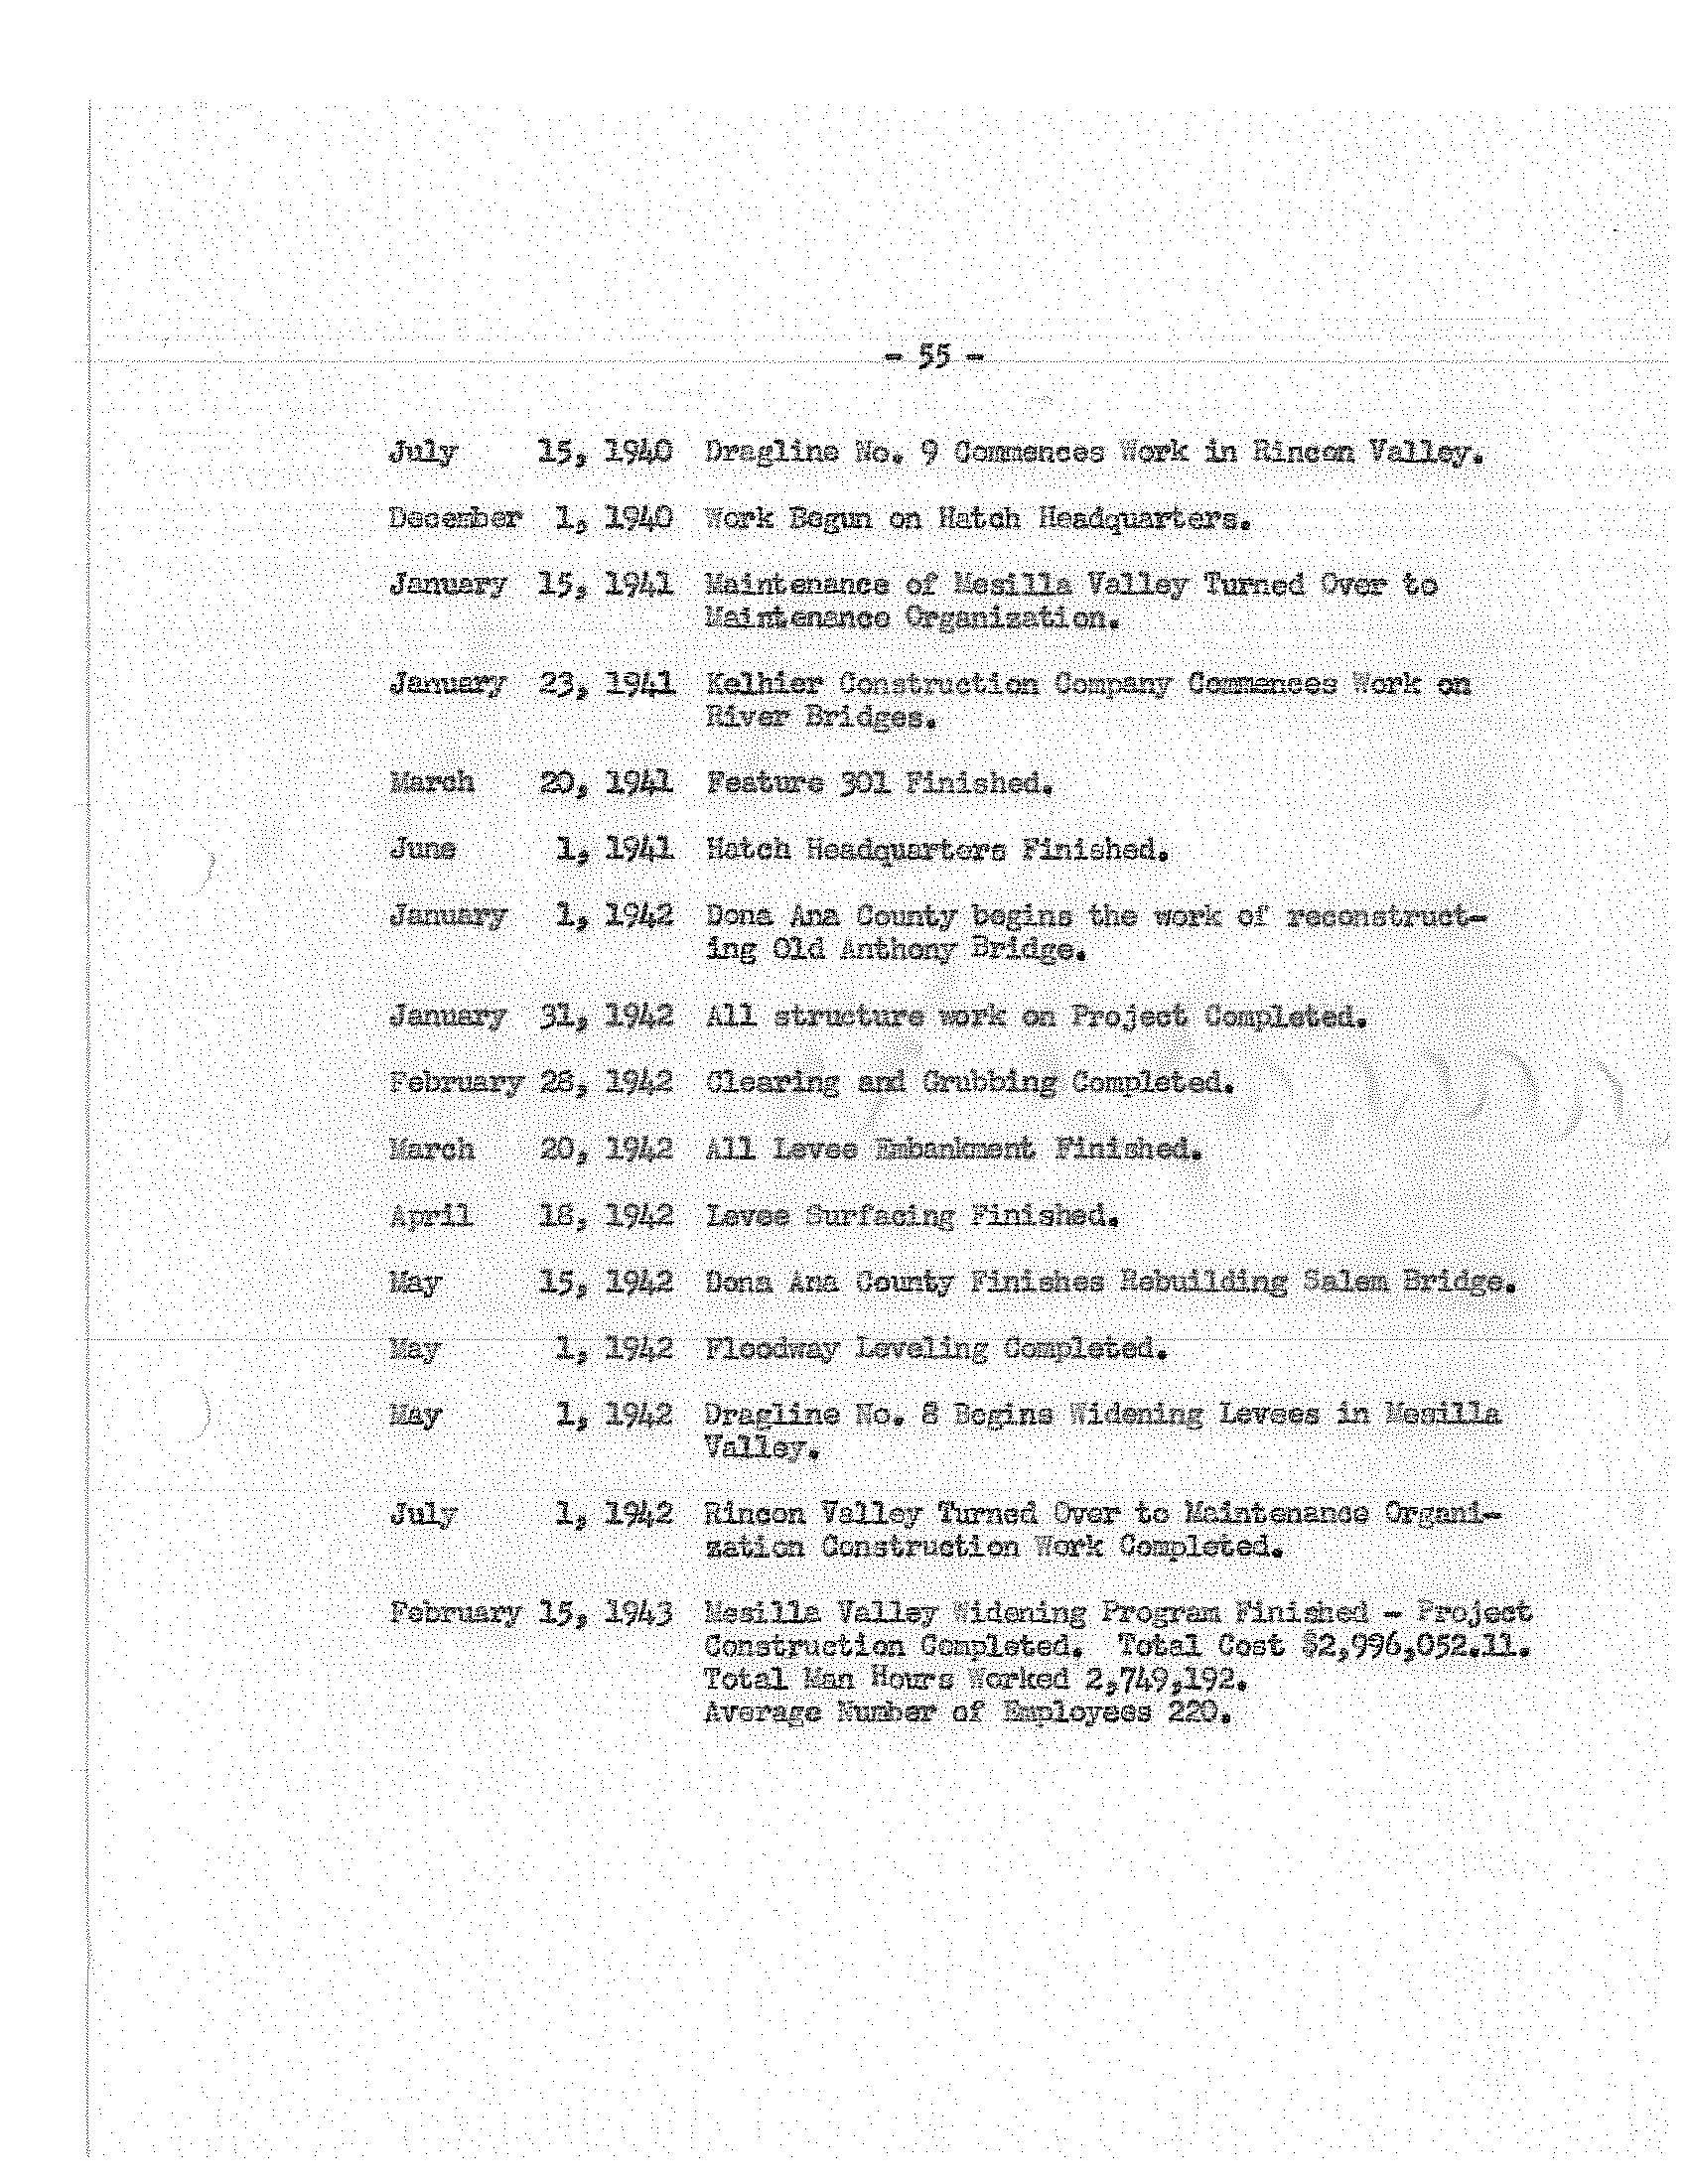 Canalization Chronology ~ July 15, 1940-February 15, 1943